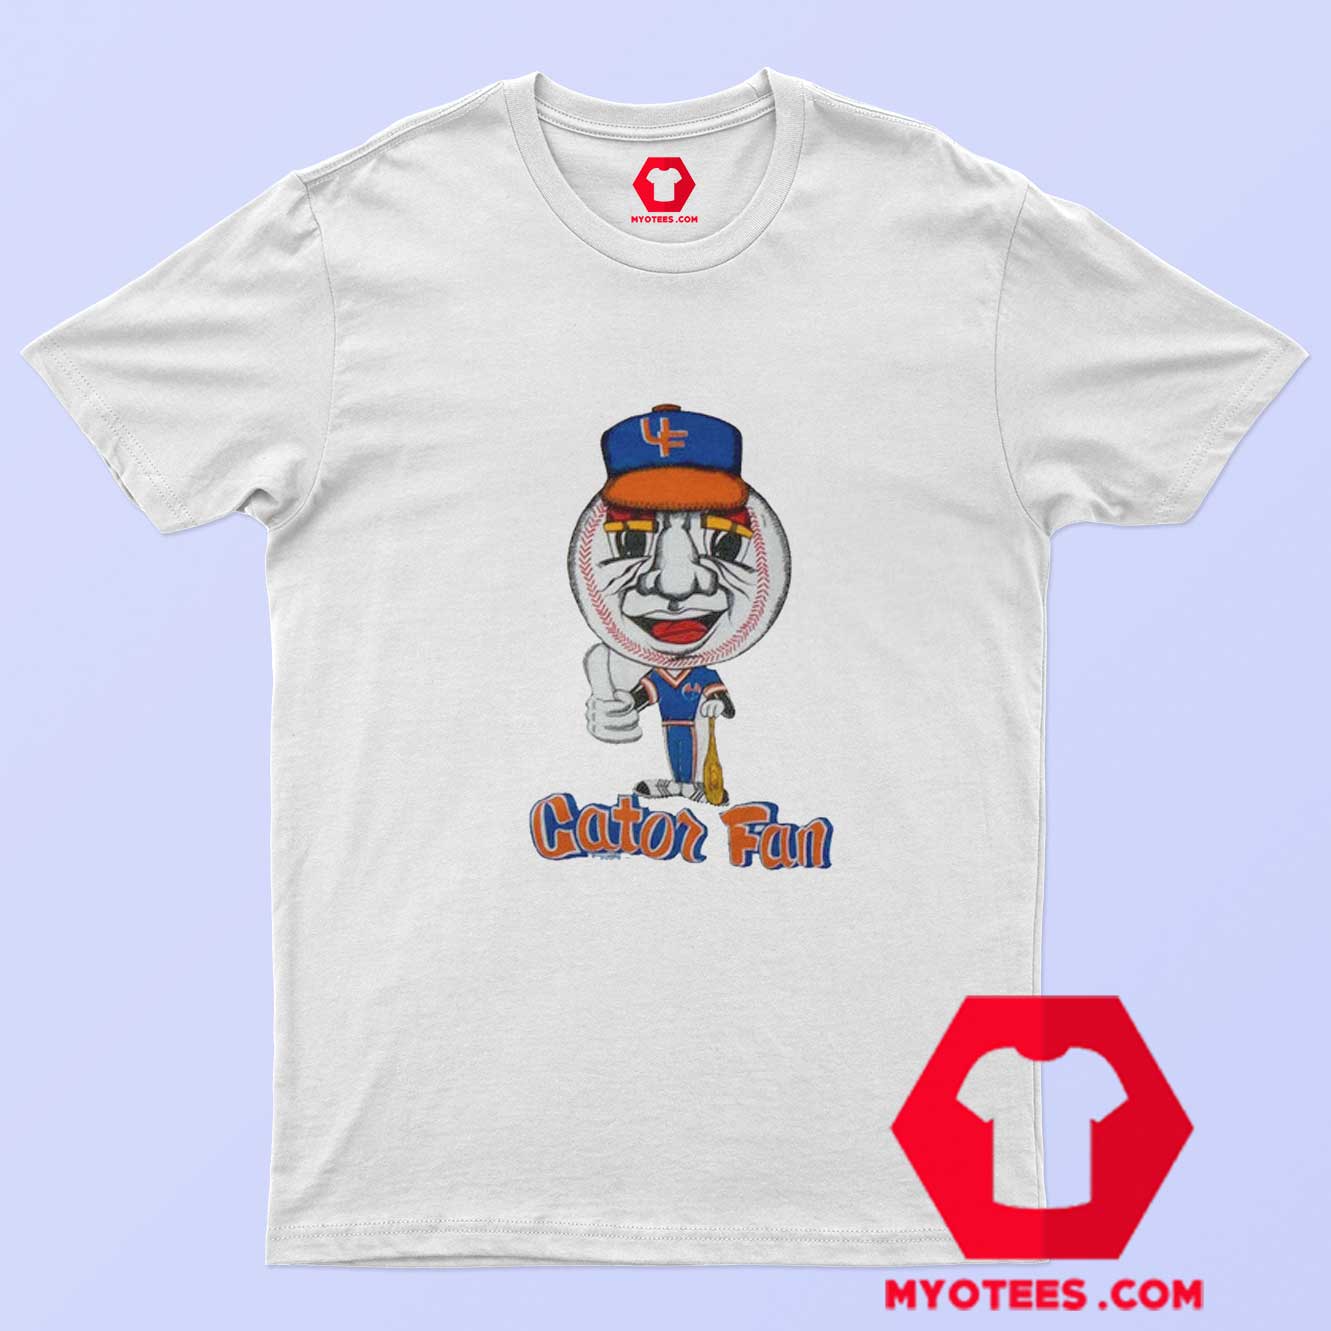 Baseball Fan T-Shirts for Sale